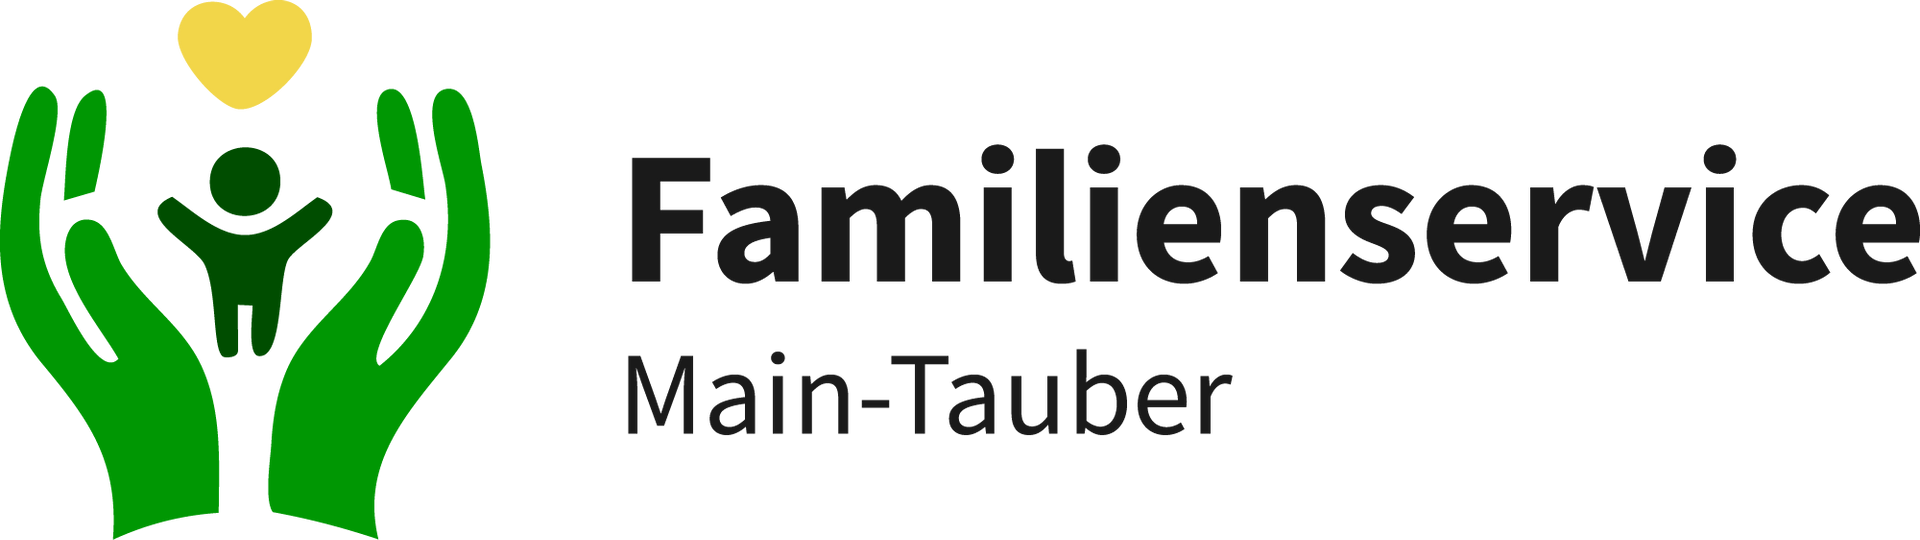 Logo Familienservice Main-Tauber